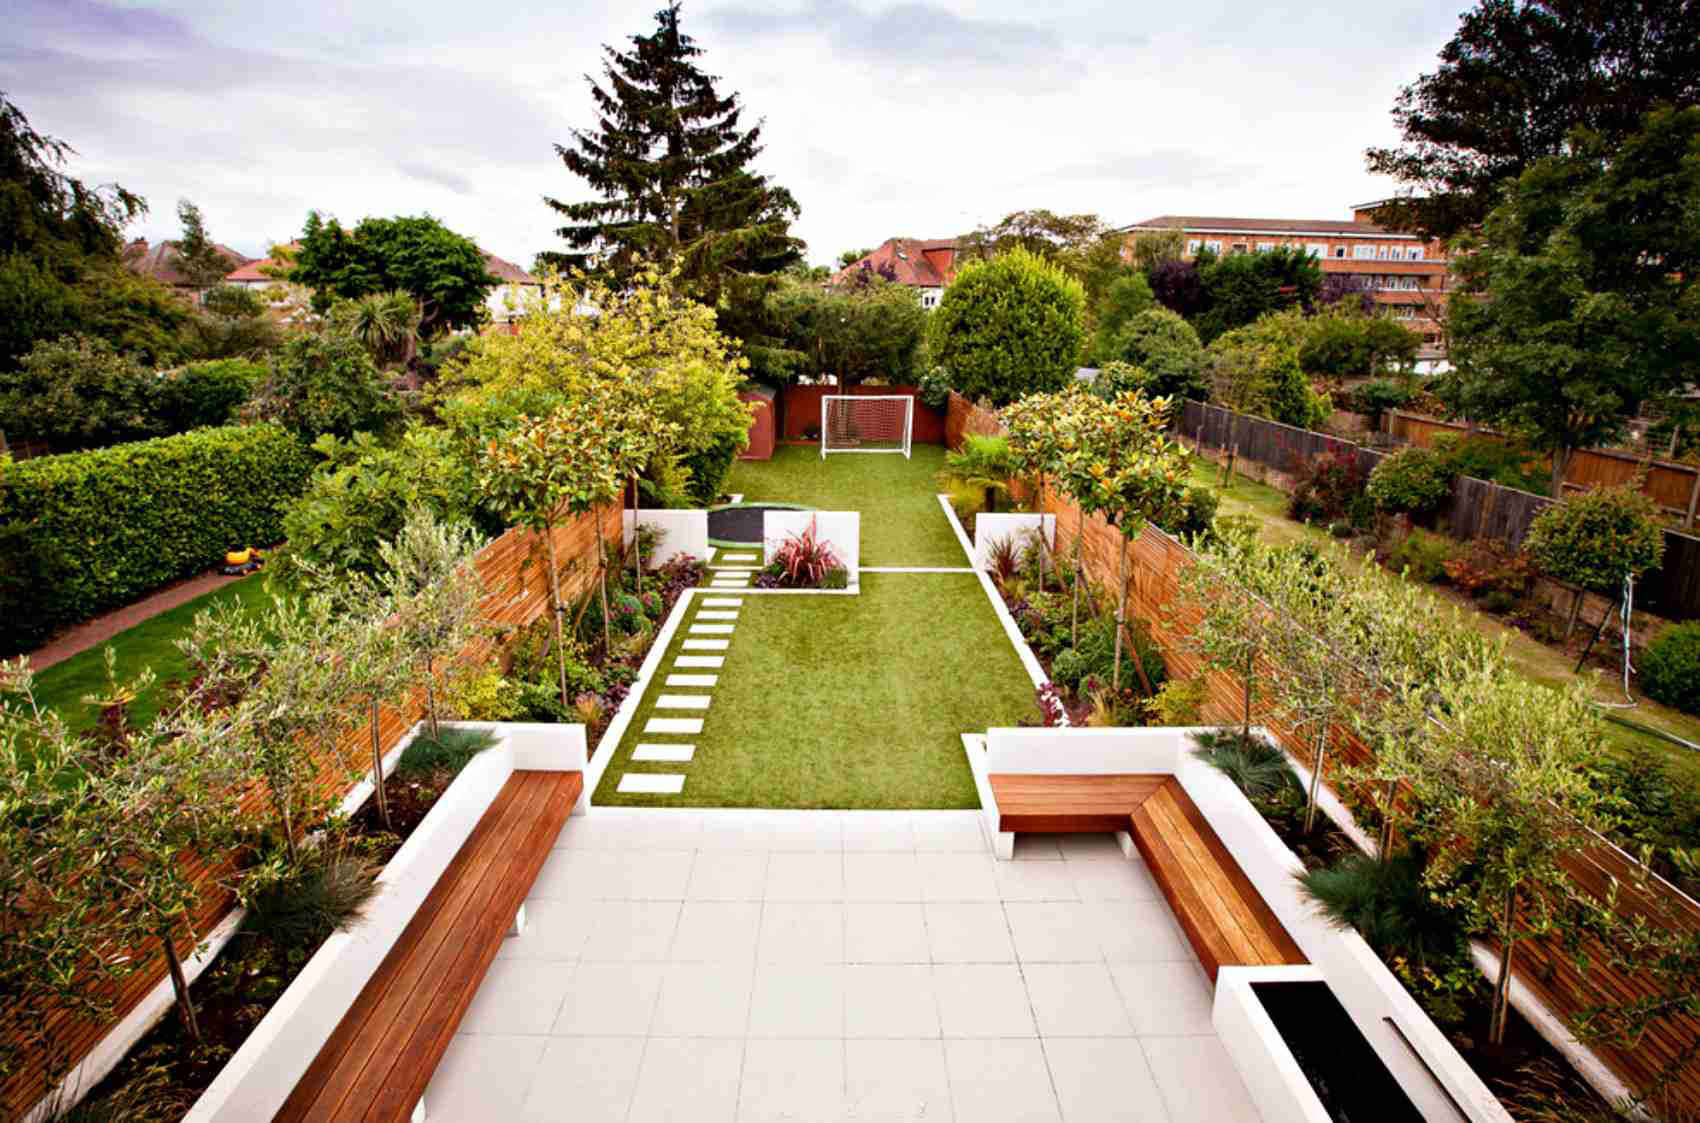 10 practical ideas for garden renovation in an economical way